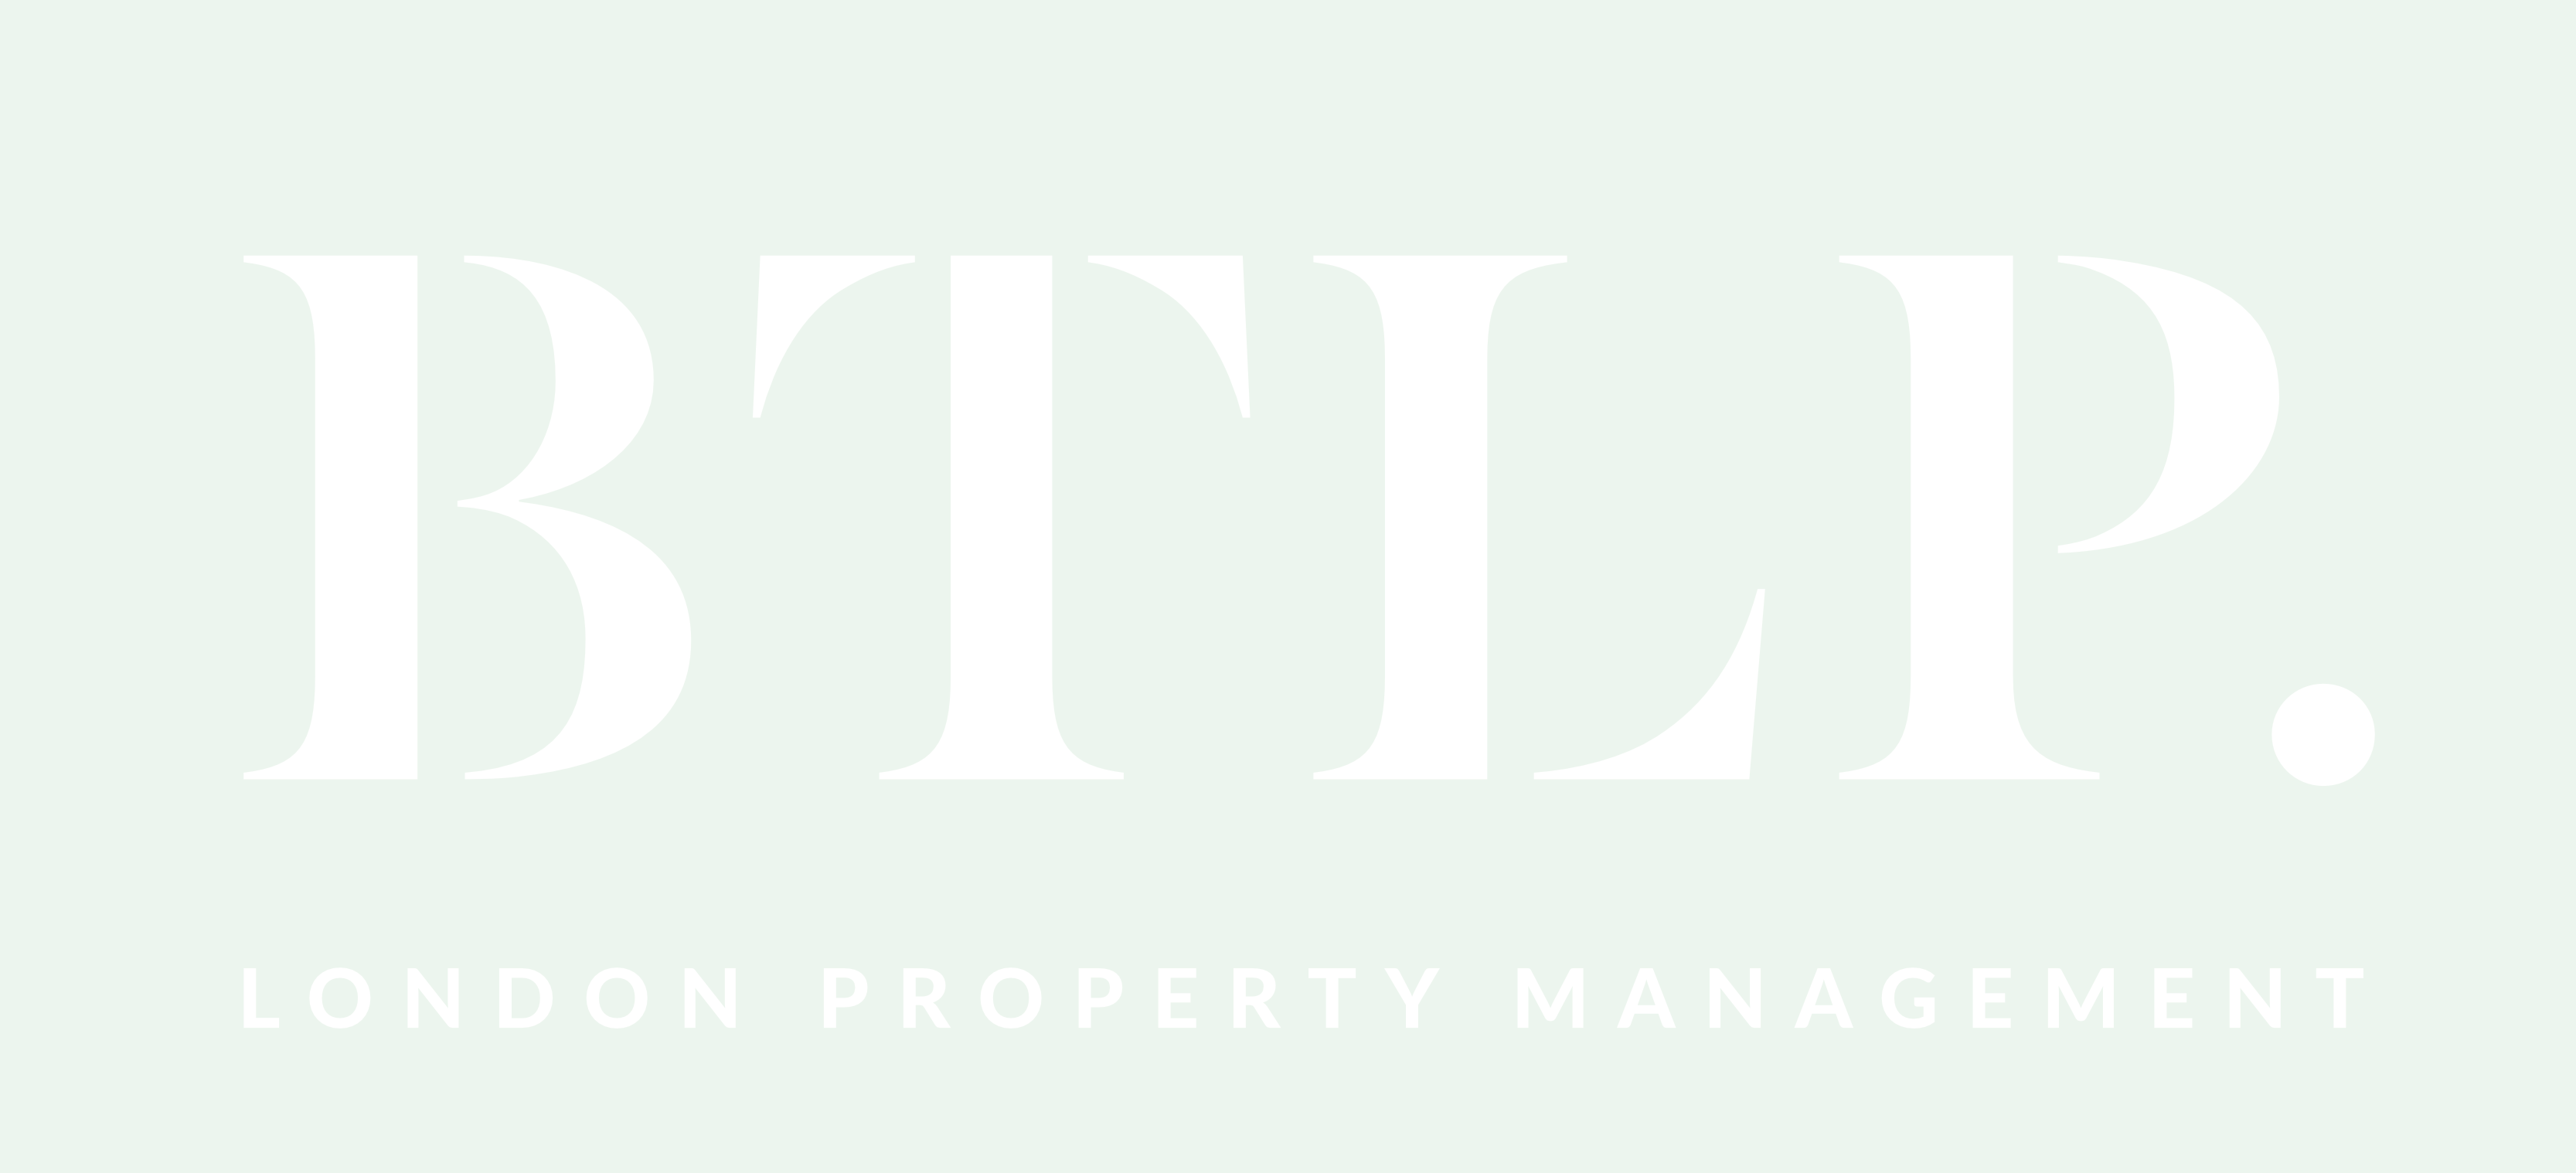 BTLP London Property Management